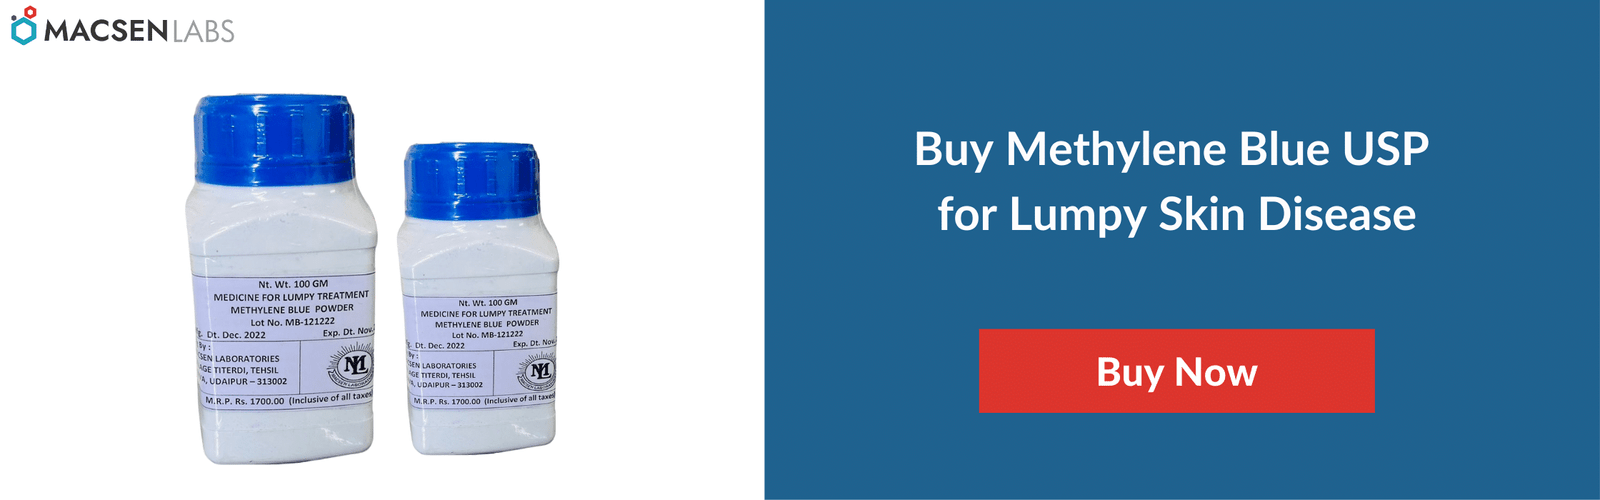 Buy Methylene Blue for Lumpy